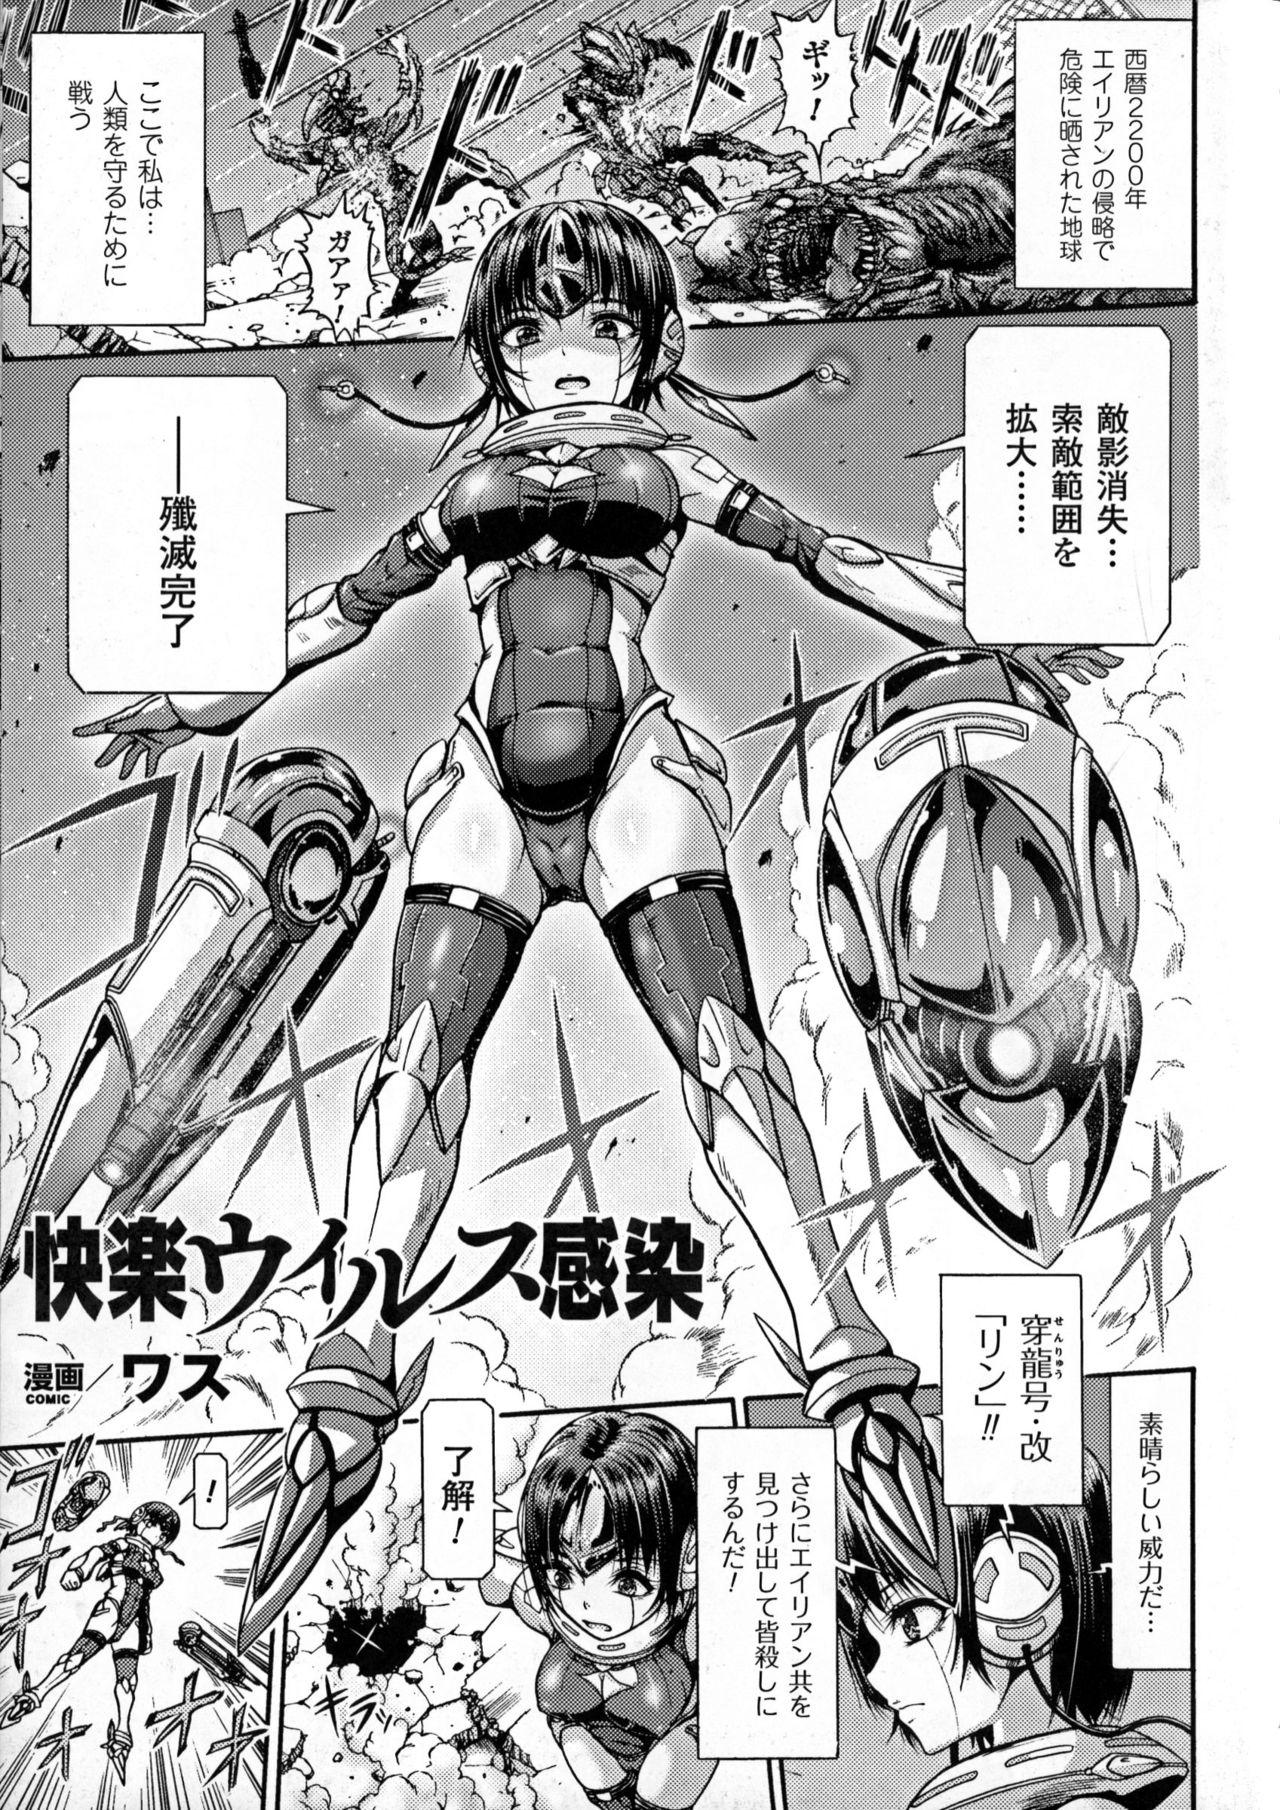 Seigi no Heroine Kangoku File DX vol. 5 38